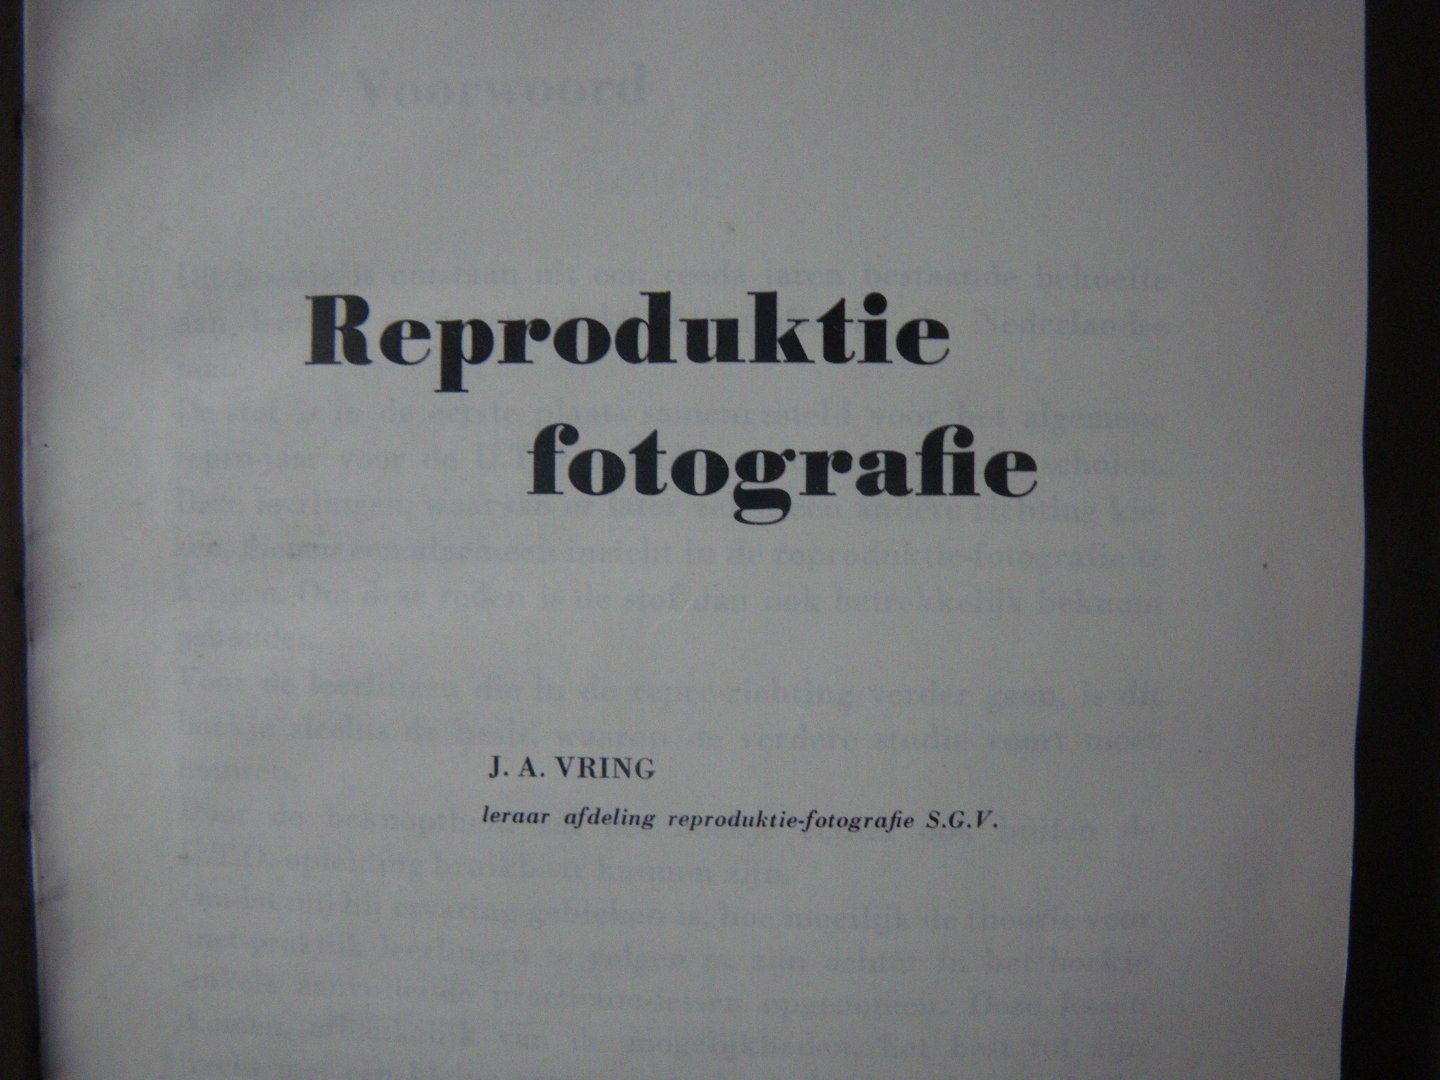 Vring J.A. (leraar afd. reproduktie-fotografie S.G.V.) - REPRODUKTIE FOTOGRAFIE REPRODUKTIEFOTOGRAFIE